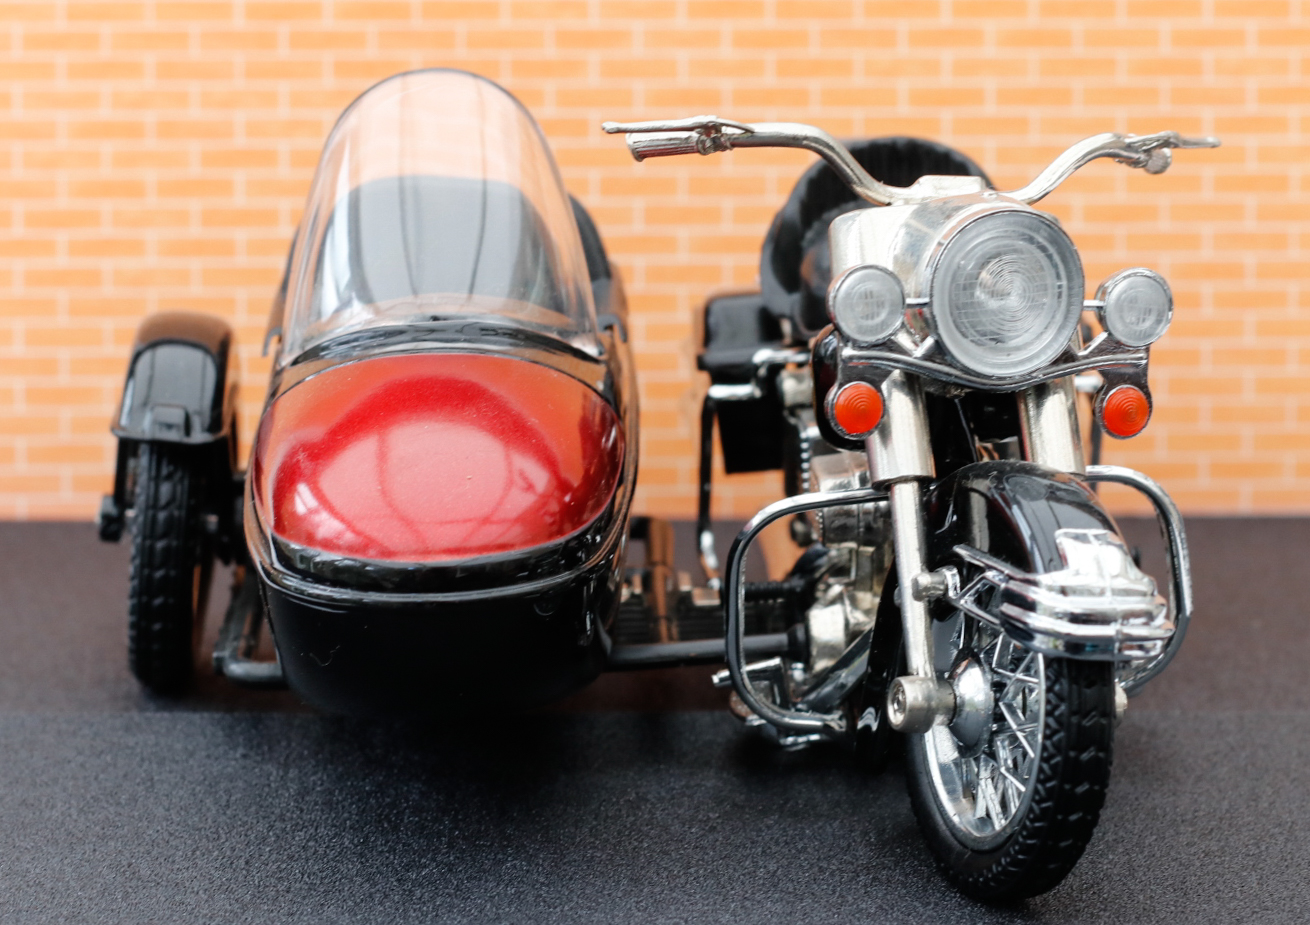 Harley Davidson 1-15 scale